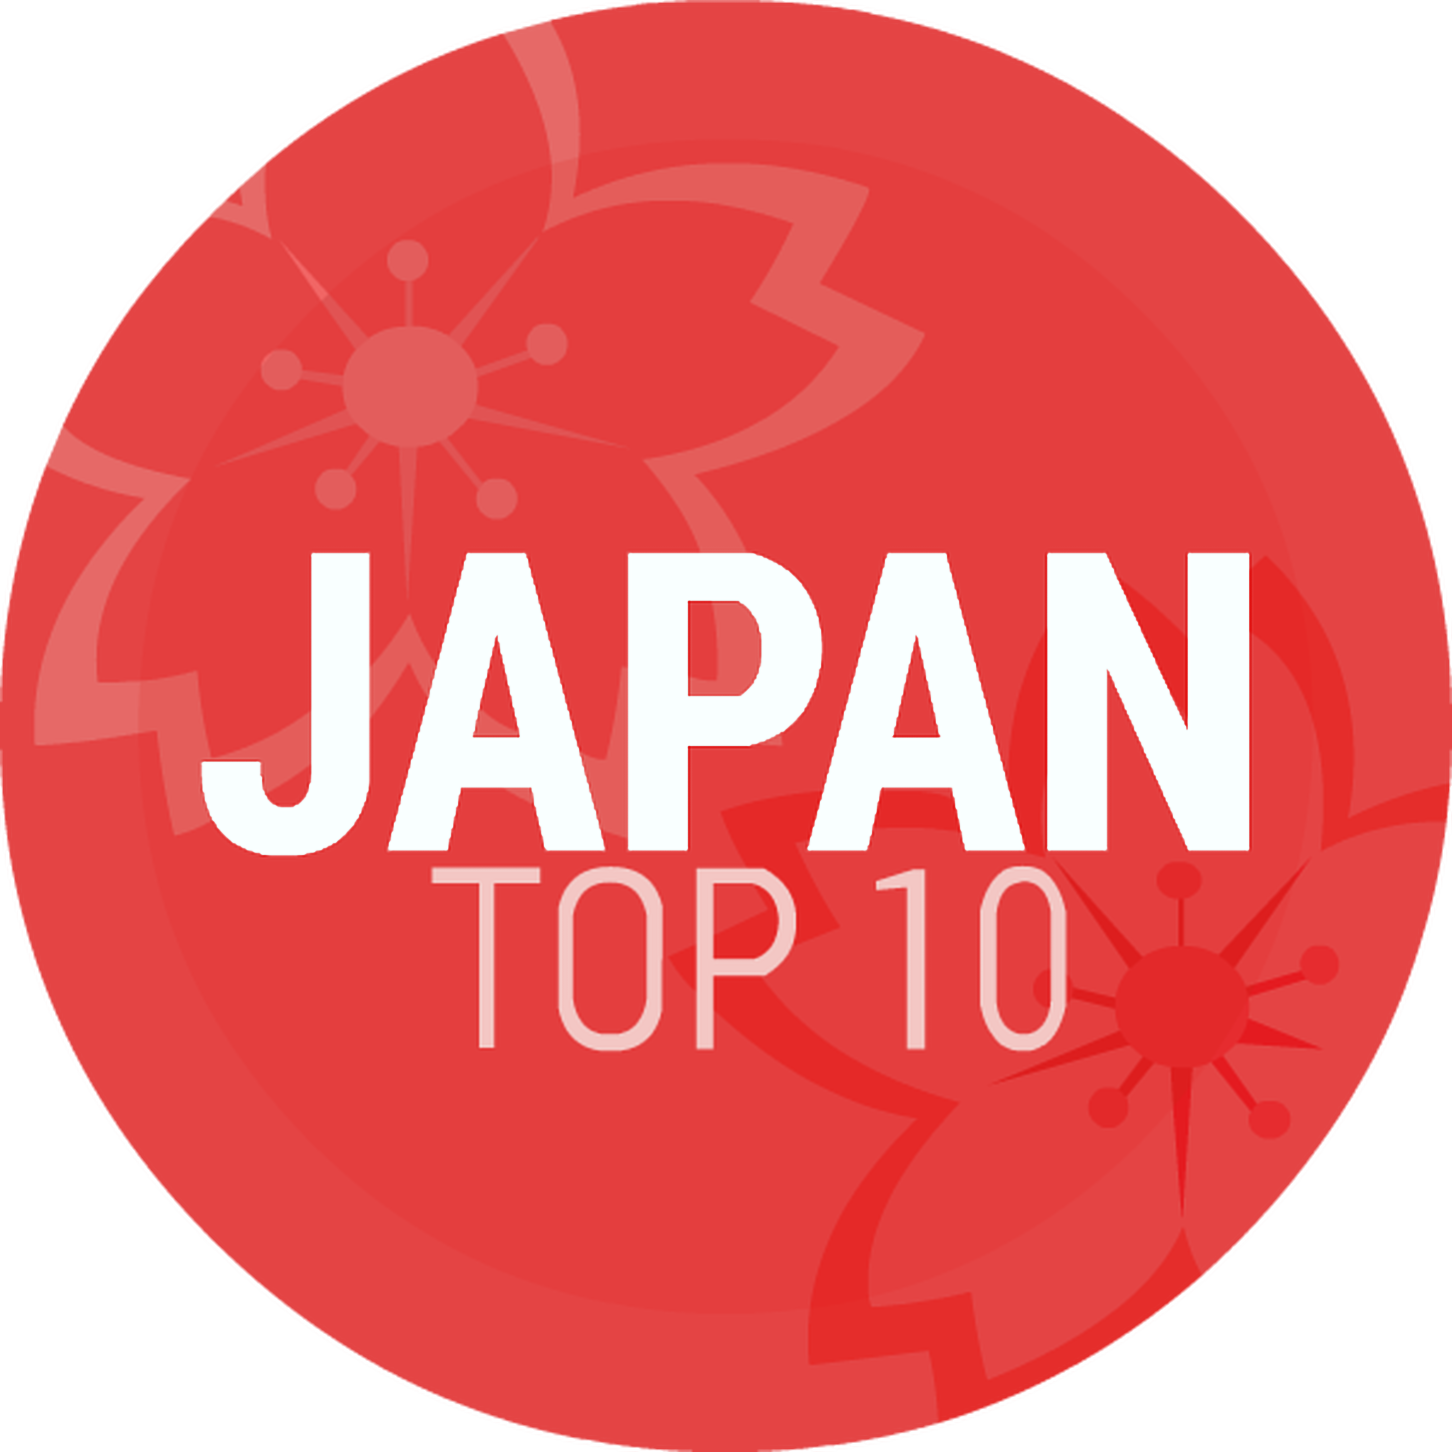 Episode 263: Japan Top 10 Winter Top 50 Special: The Top 50 Songs of 2018